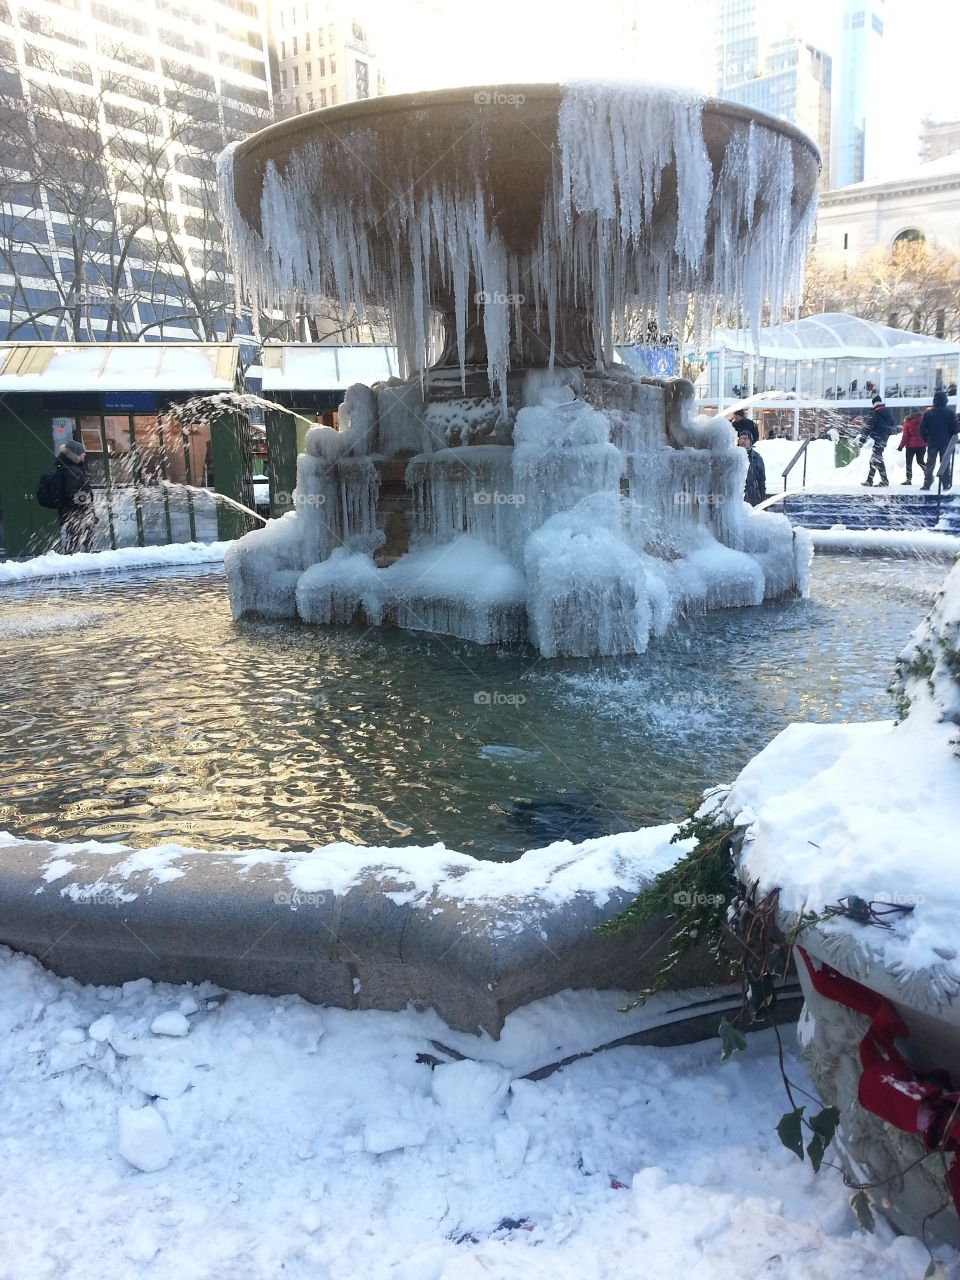 Josephine Shaw Lowell Fountain - Snow